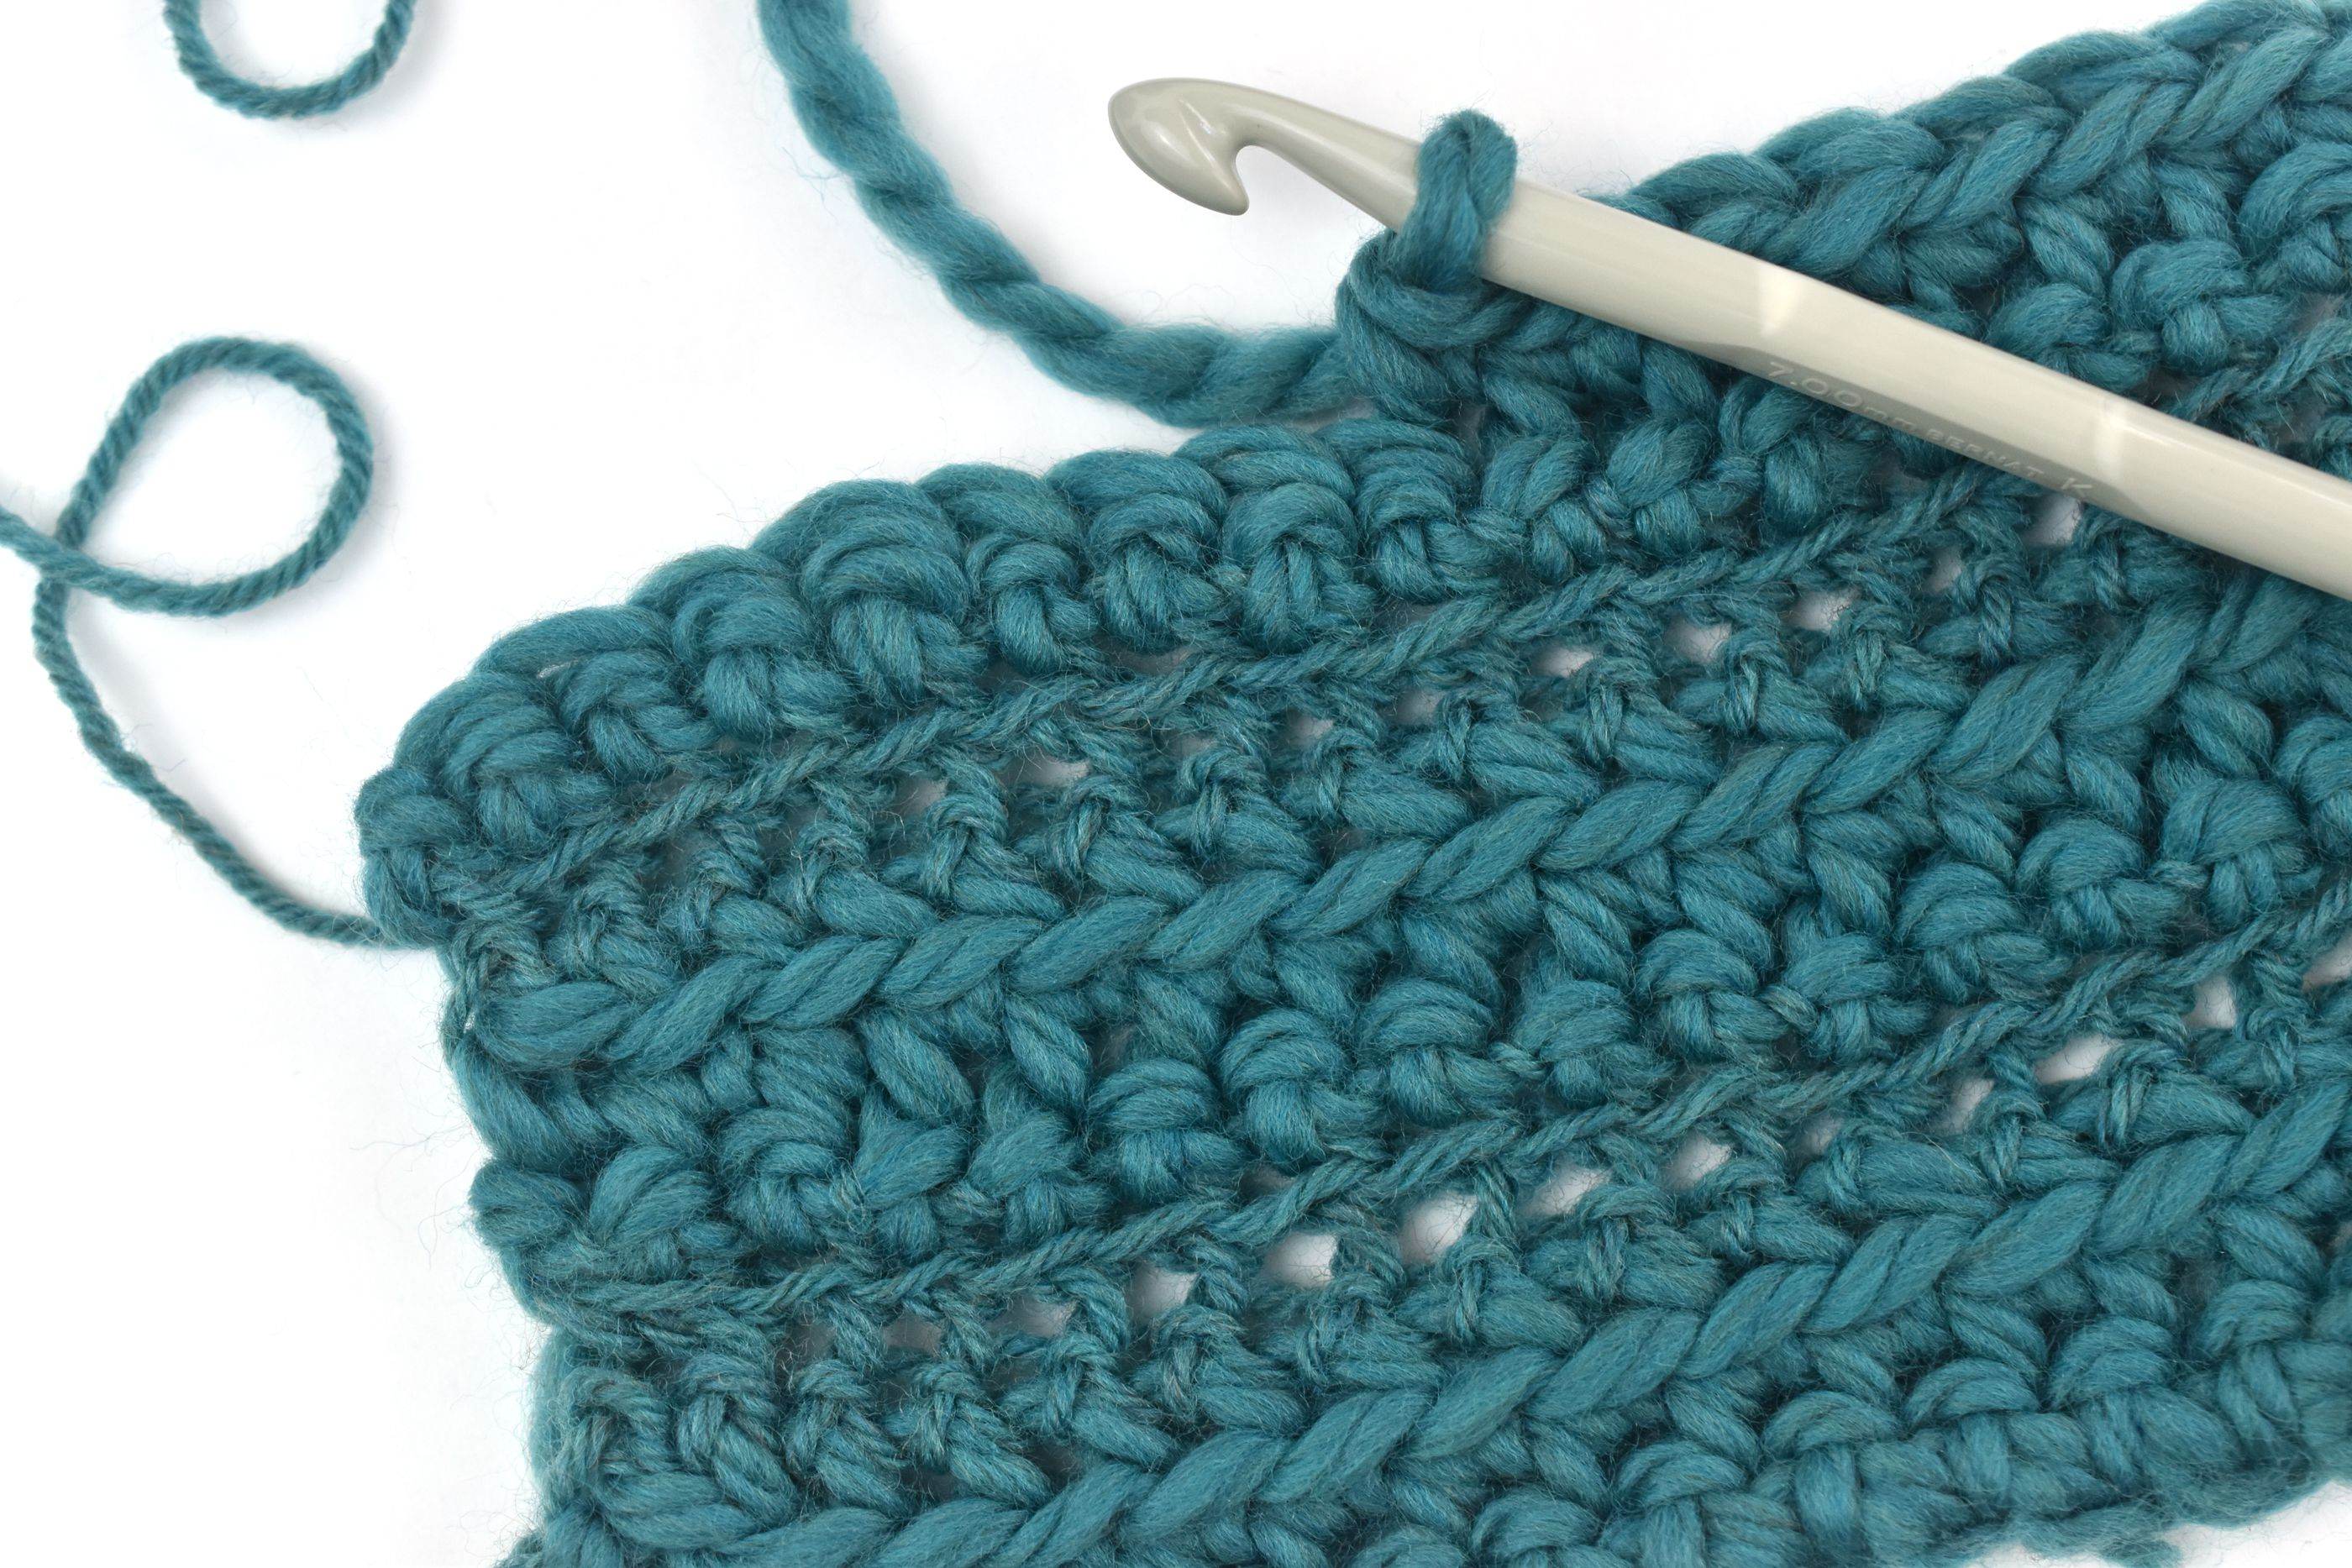 Crochet Stitches Patterns 10 Most Popular Crochet Stitches